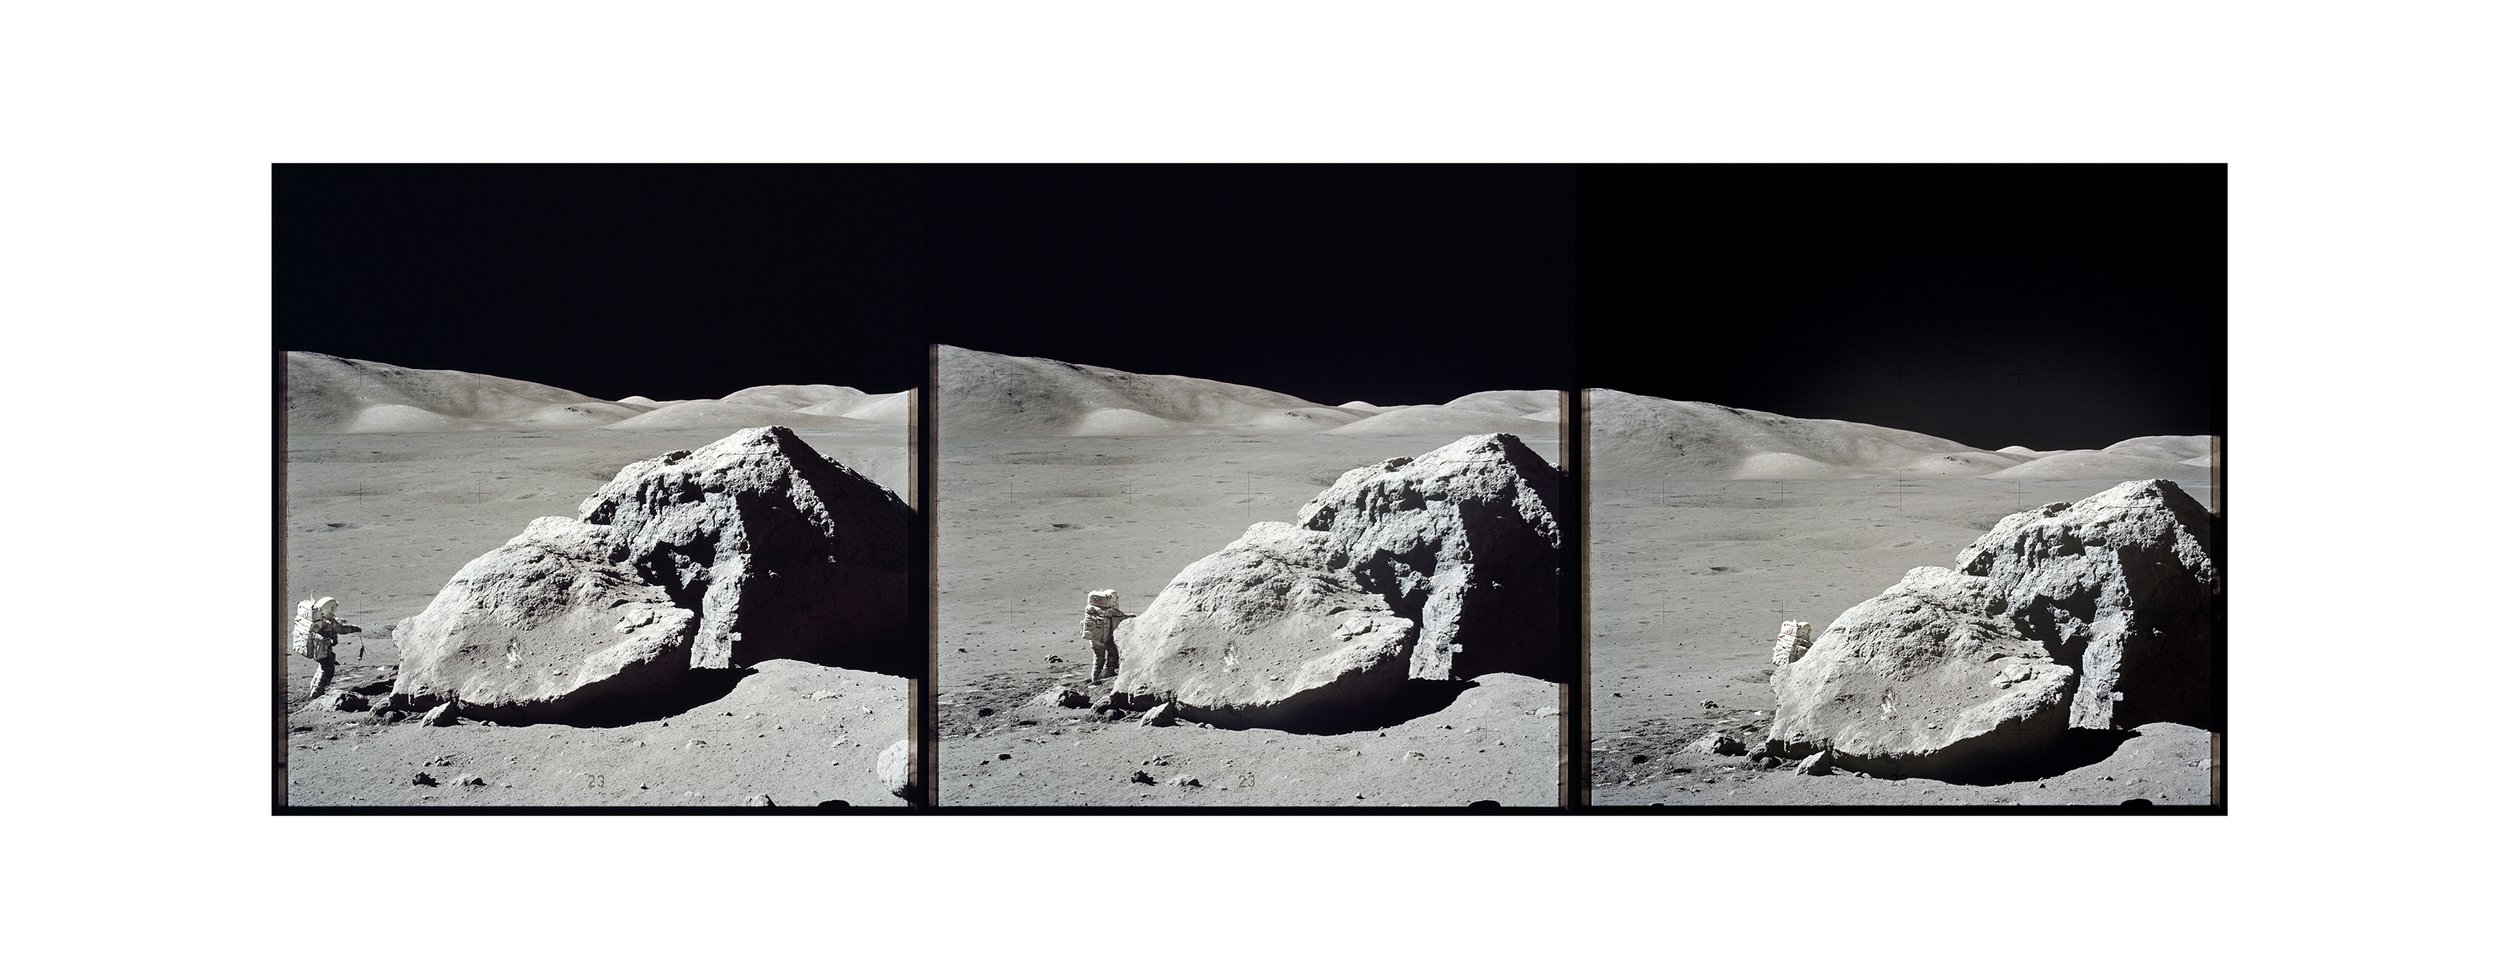  Taurus Mountains, Tracy’s rock with Harrison H. Schmitt (140x06)Apollo 17 Magazine 140/E - NASA photographs 1972 